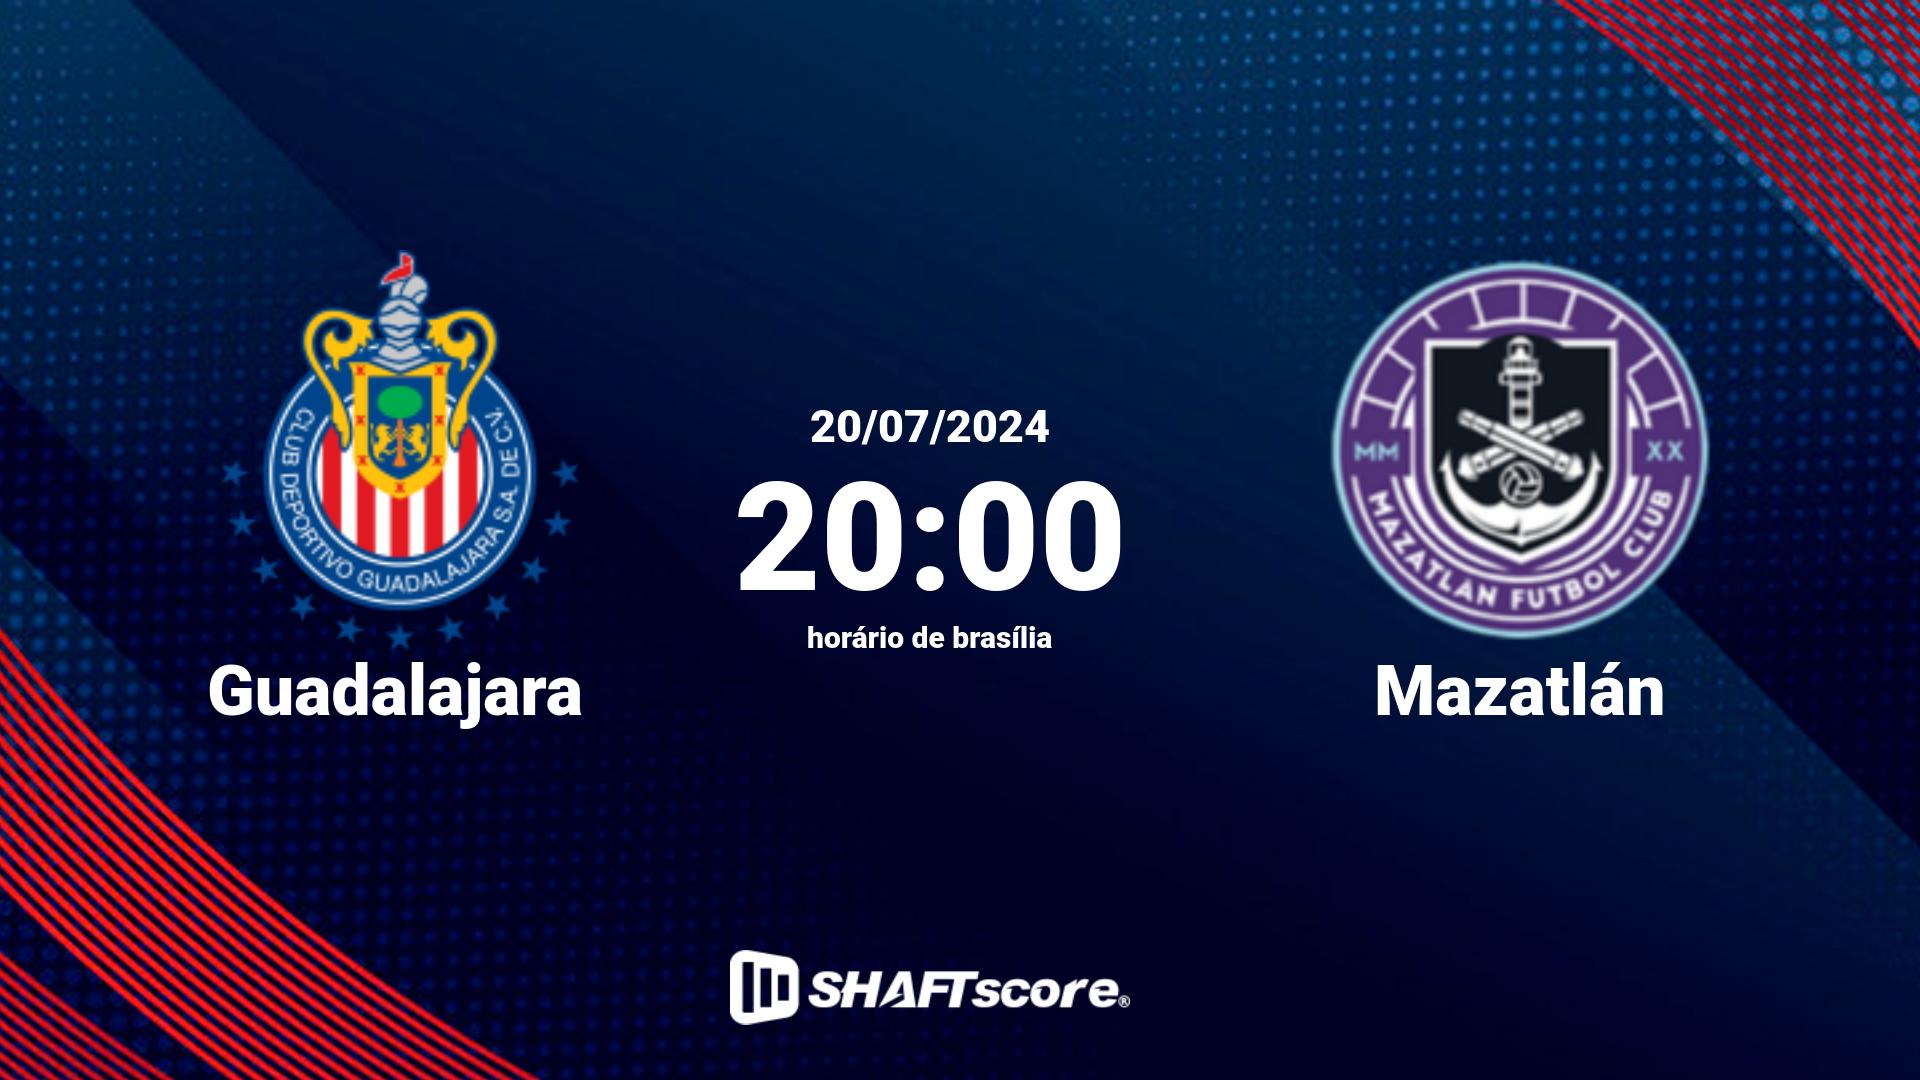 Estatísticas do jogo Guadalajara vs Mazatlán 20.07 20:00